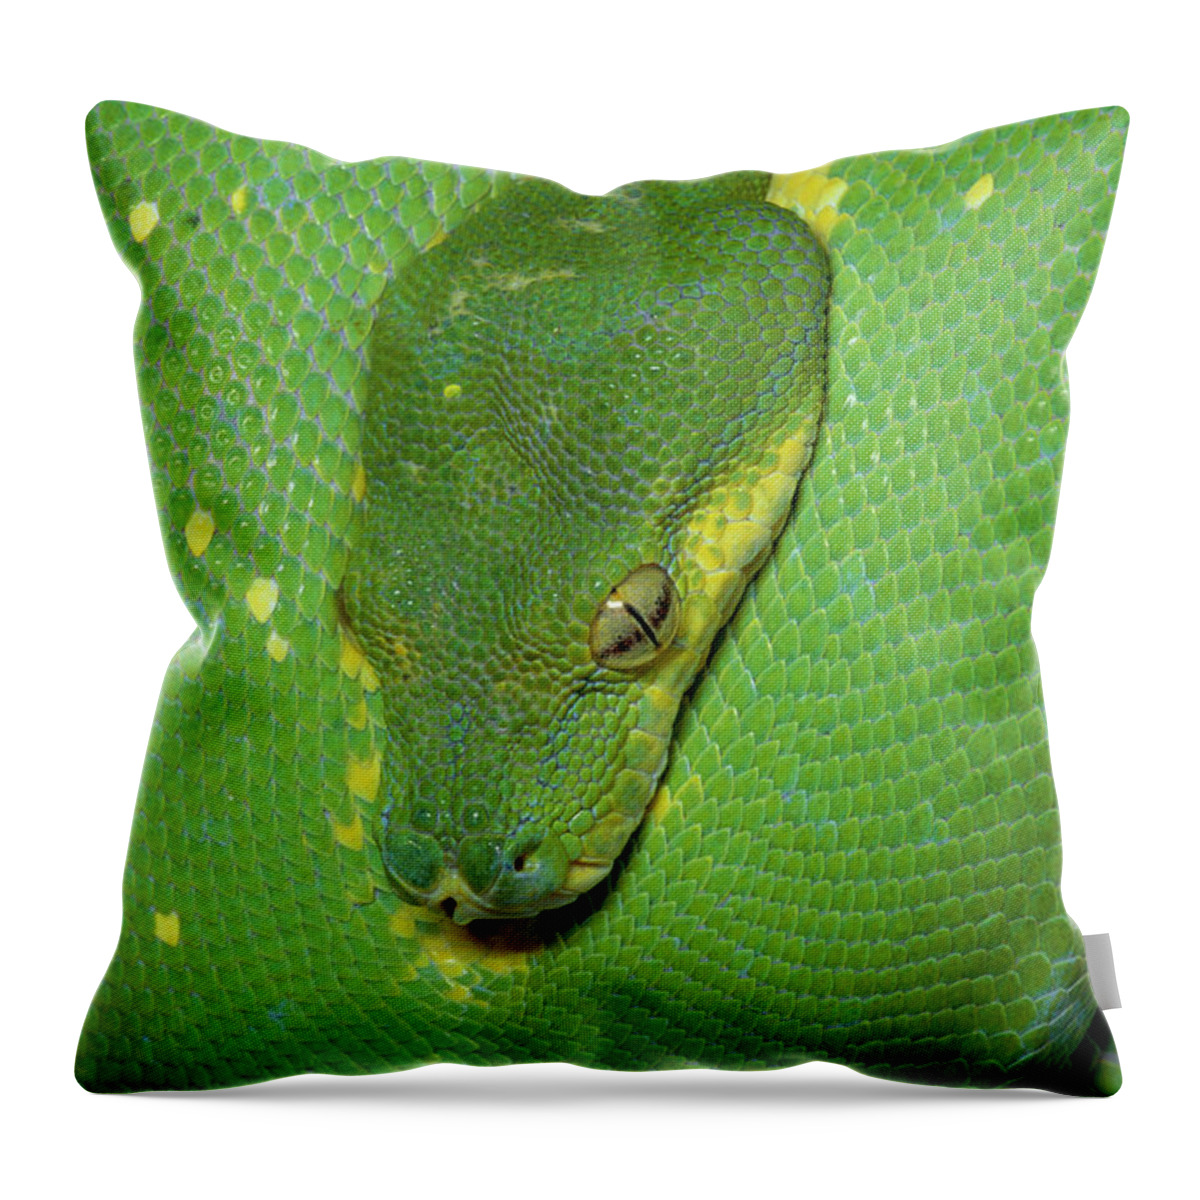 Mp Throw Pillow featuring the photograph Green Tree Python Chondropython Viridis by Michael & Patricia Fogden